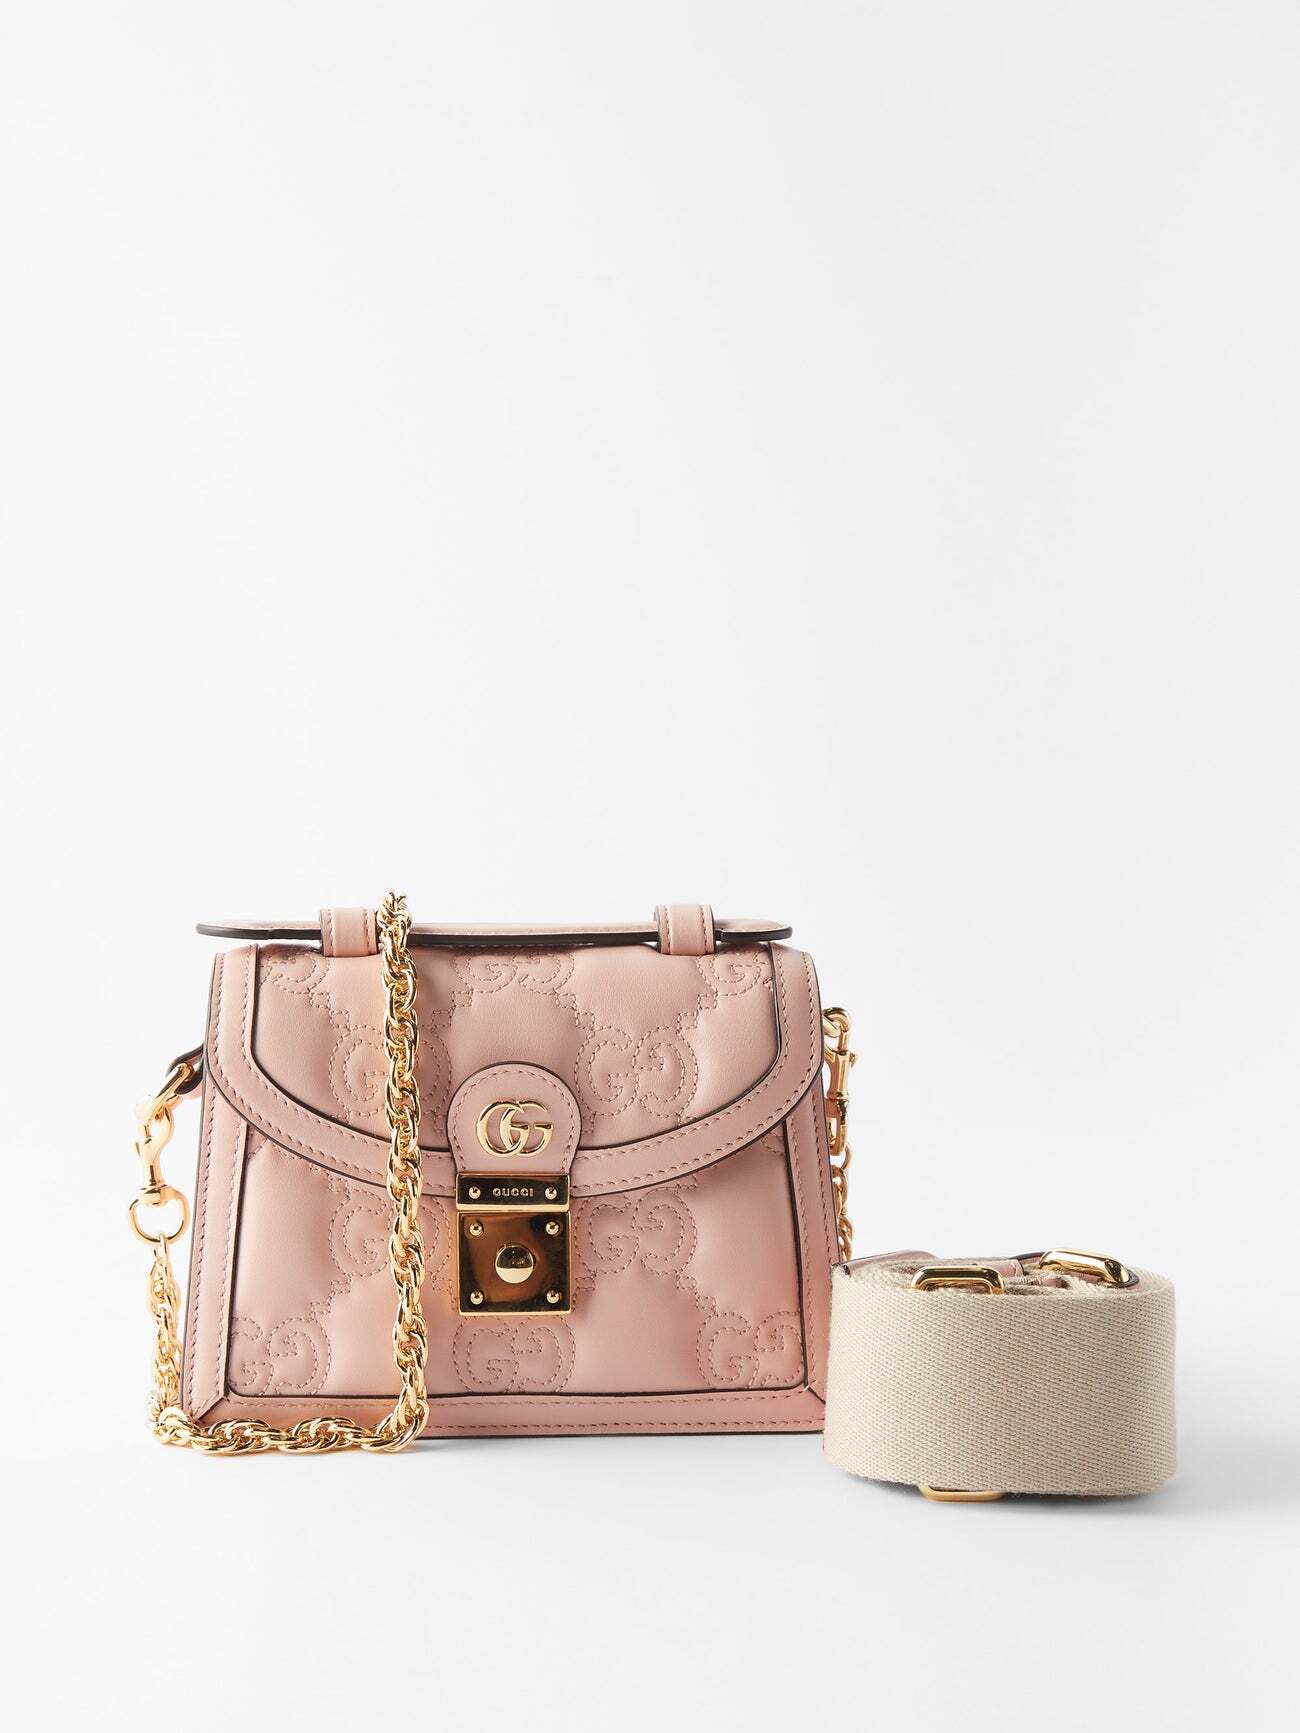 Gucci - GG-matelassé Leather Handbag - Womens - Light Pink